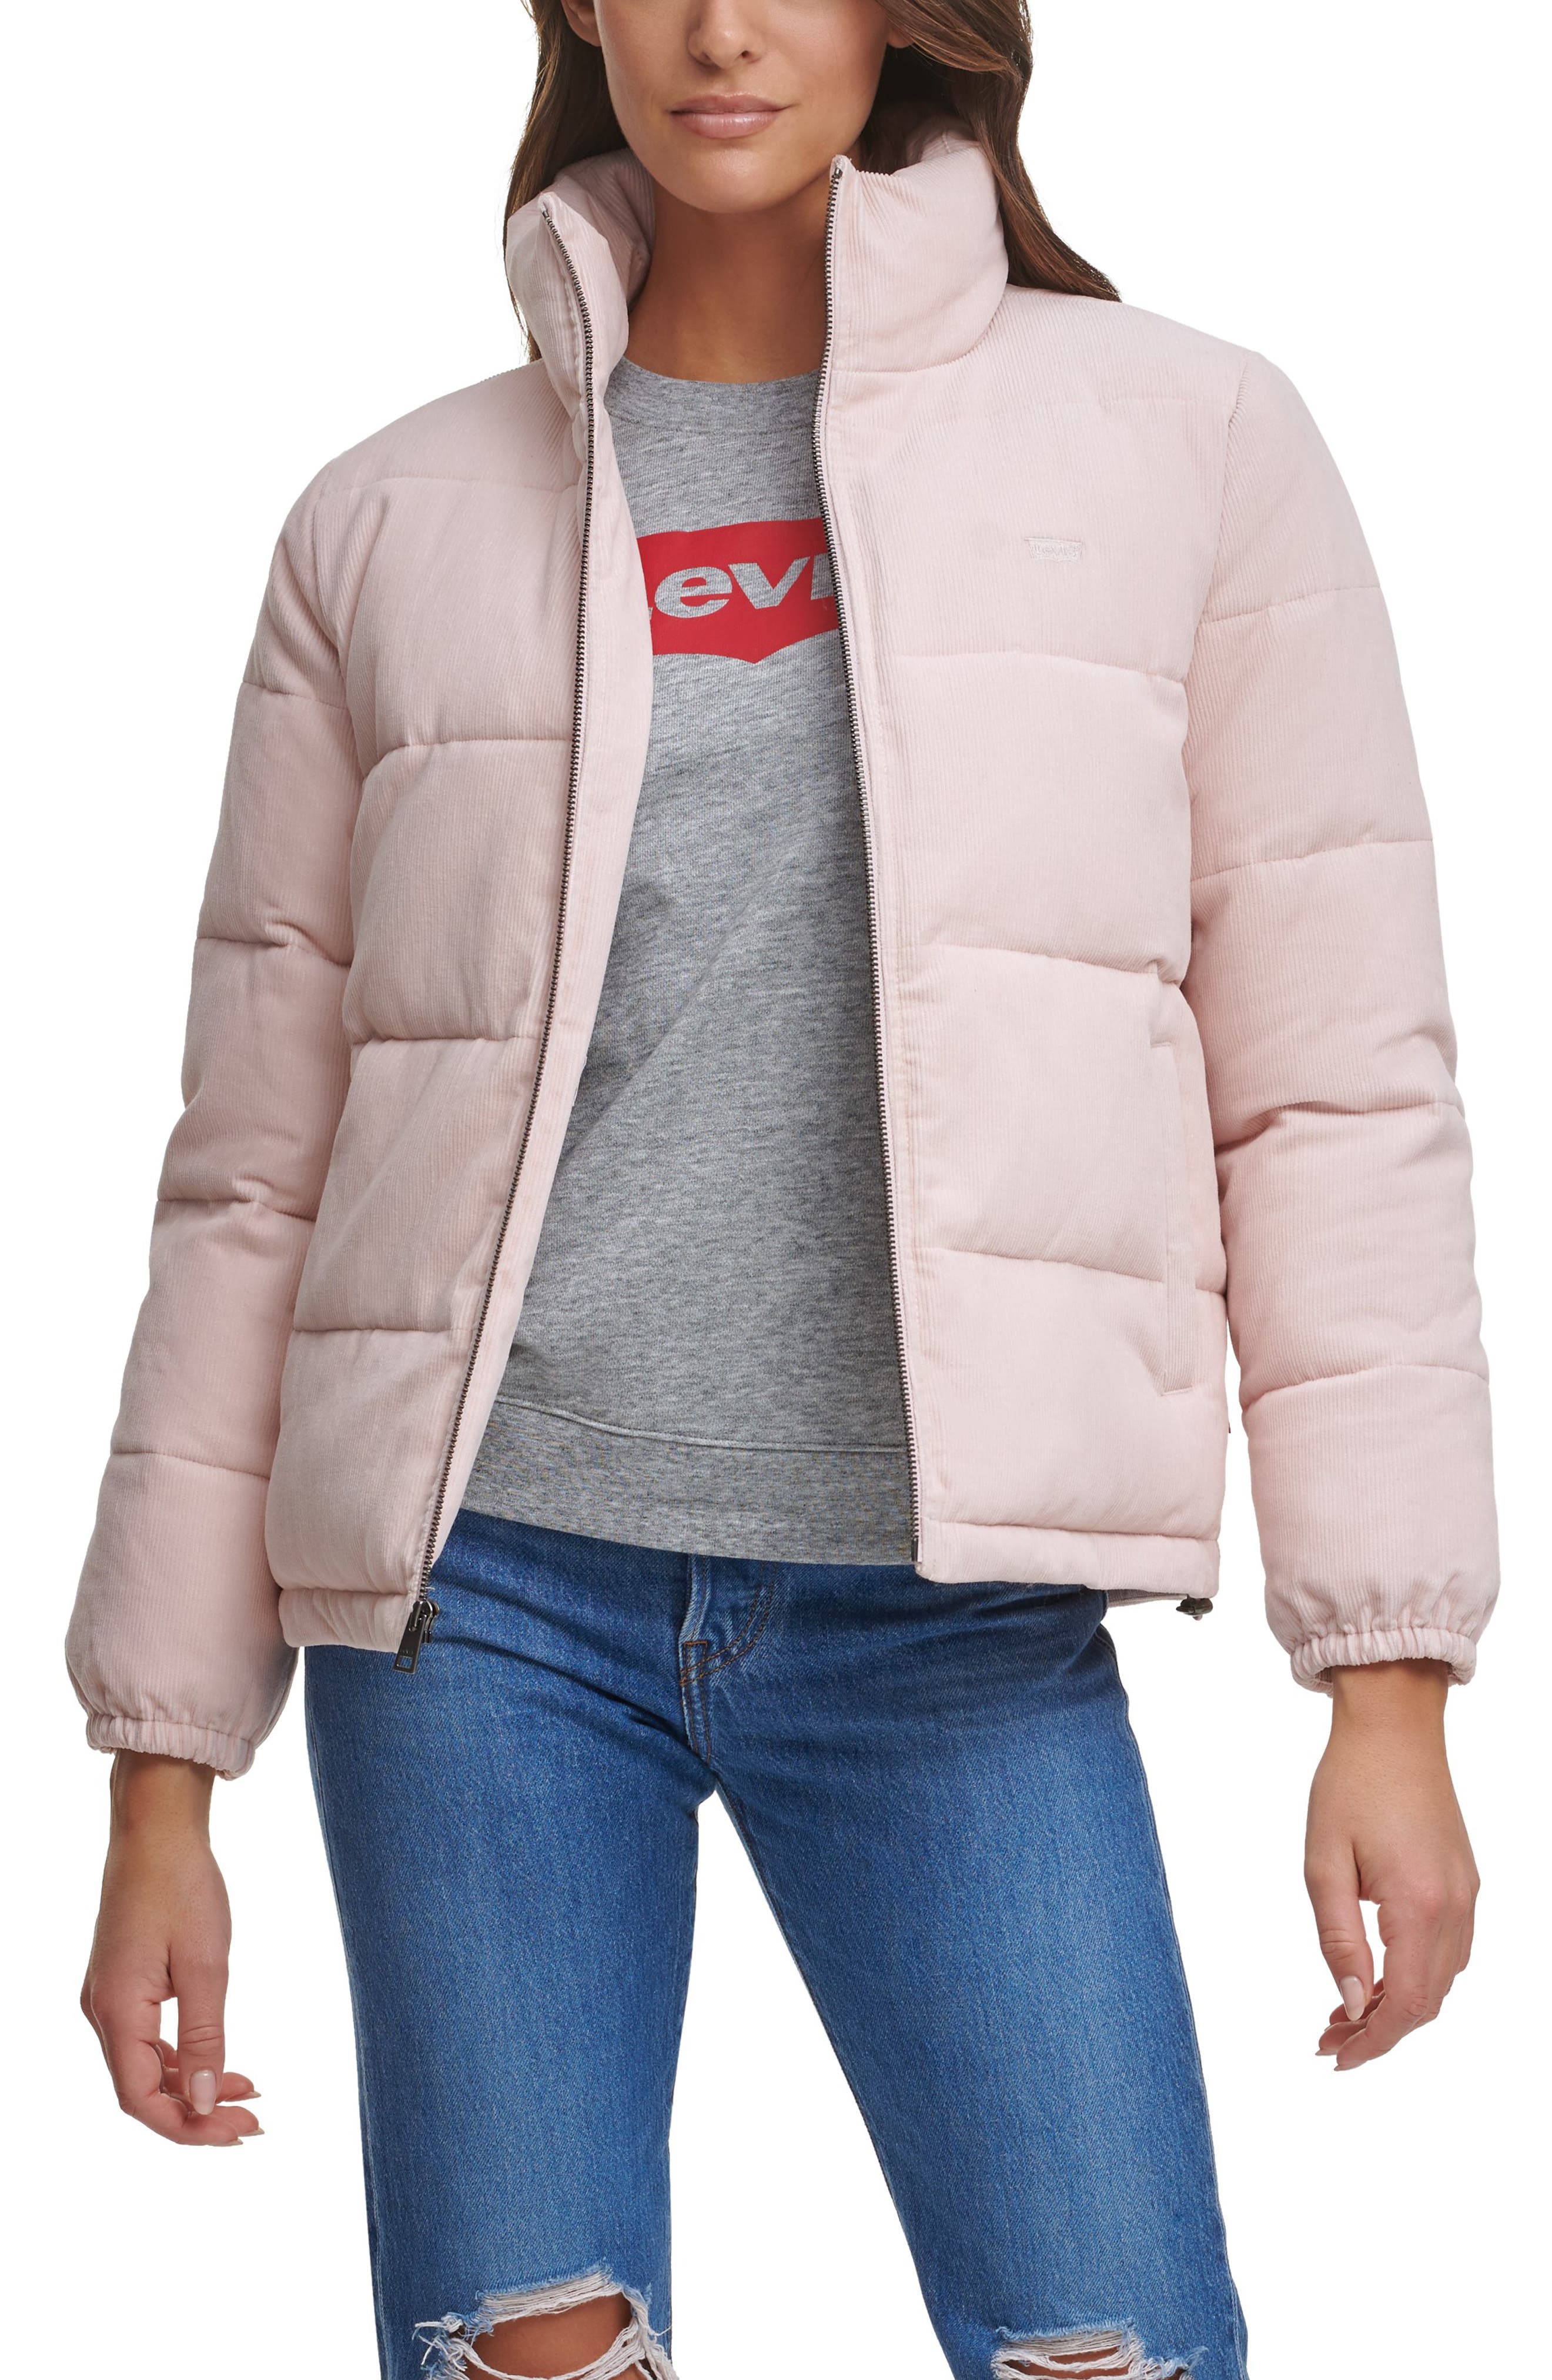 levi jackets for women